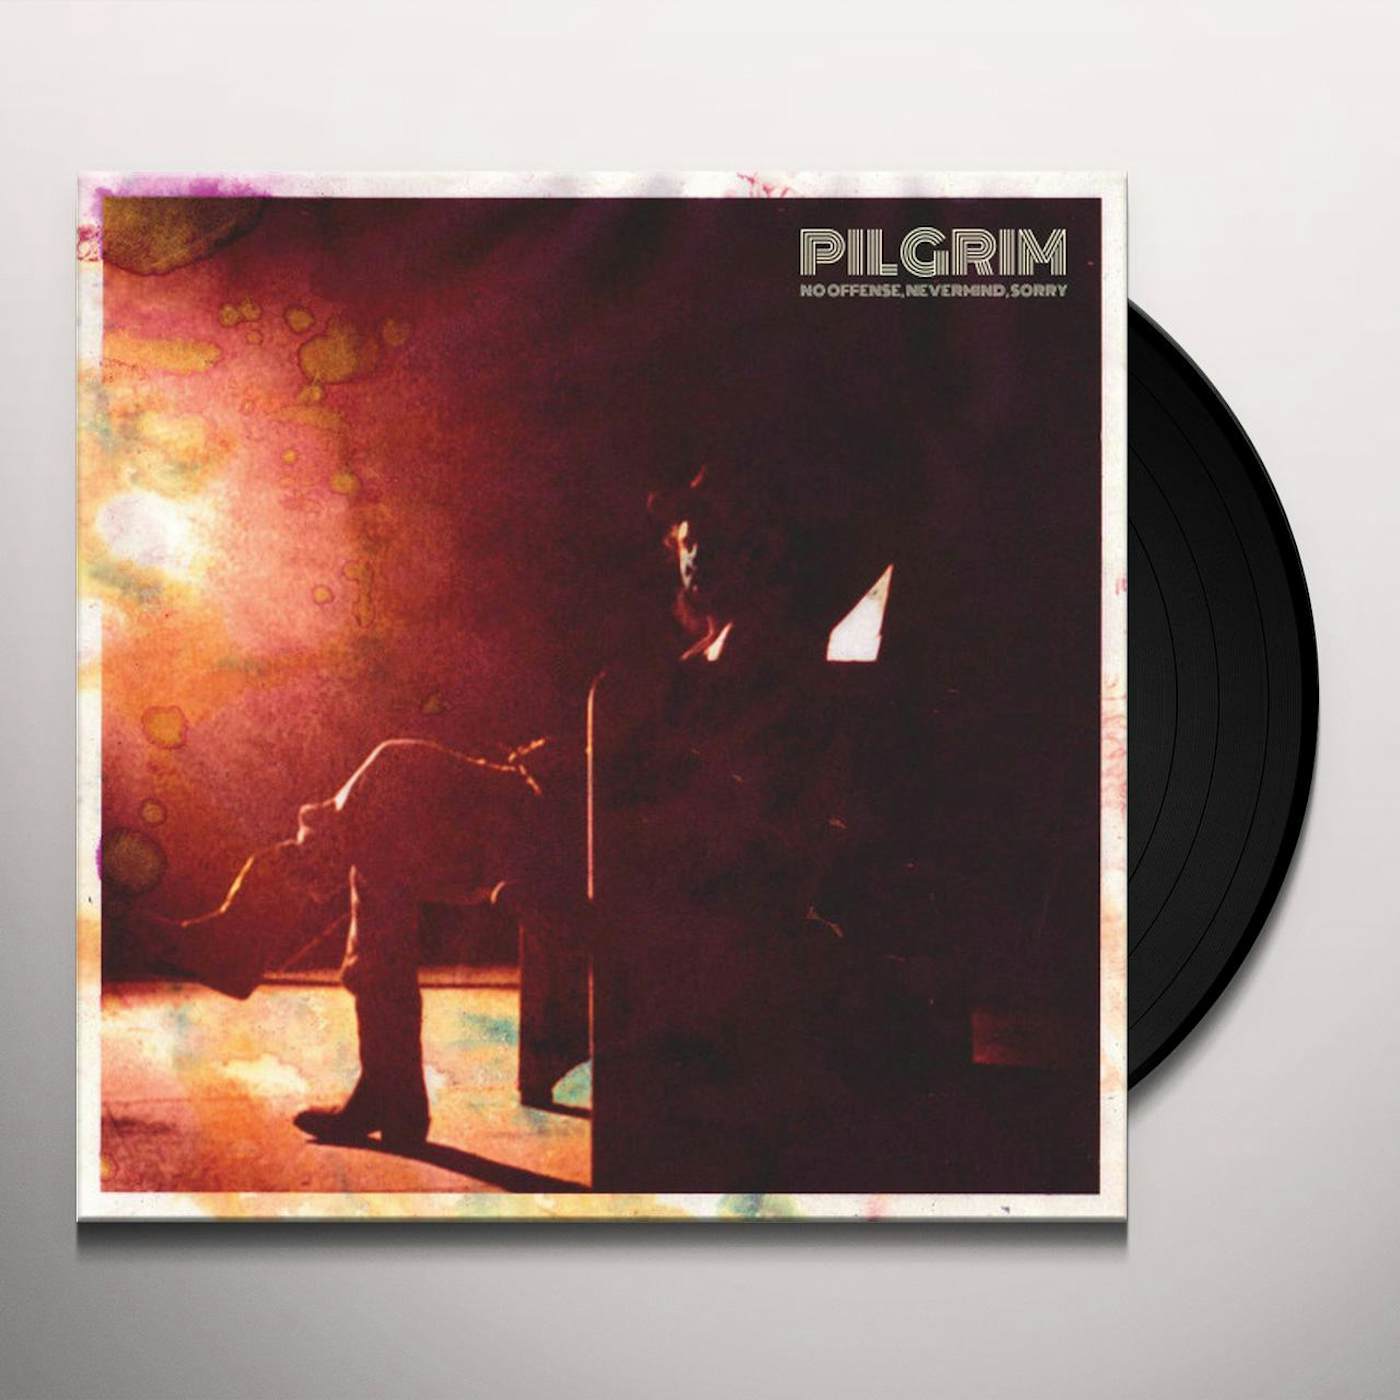 The Pilgrim NO OFFENSE, NEVERMIND, SORRY Vinyl Record